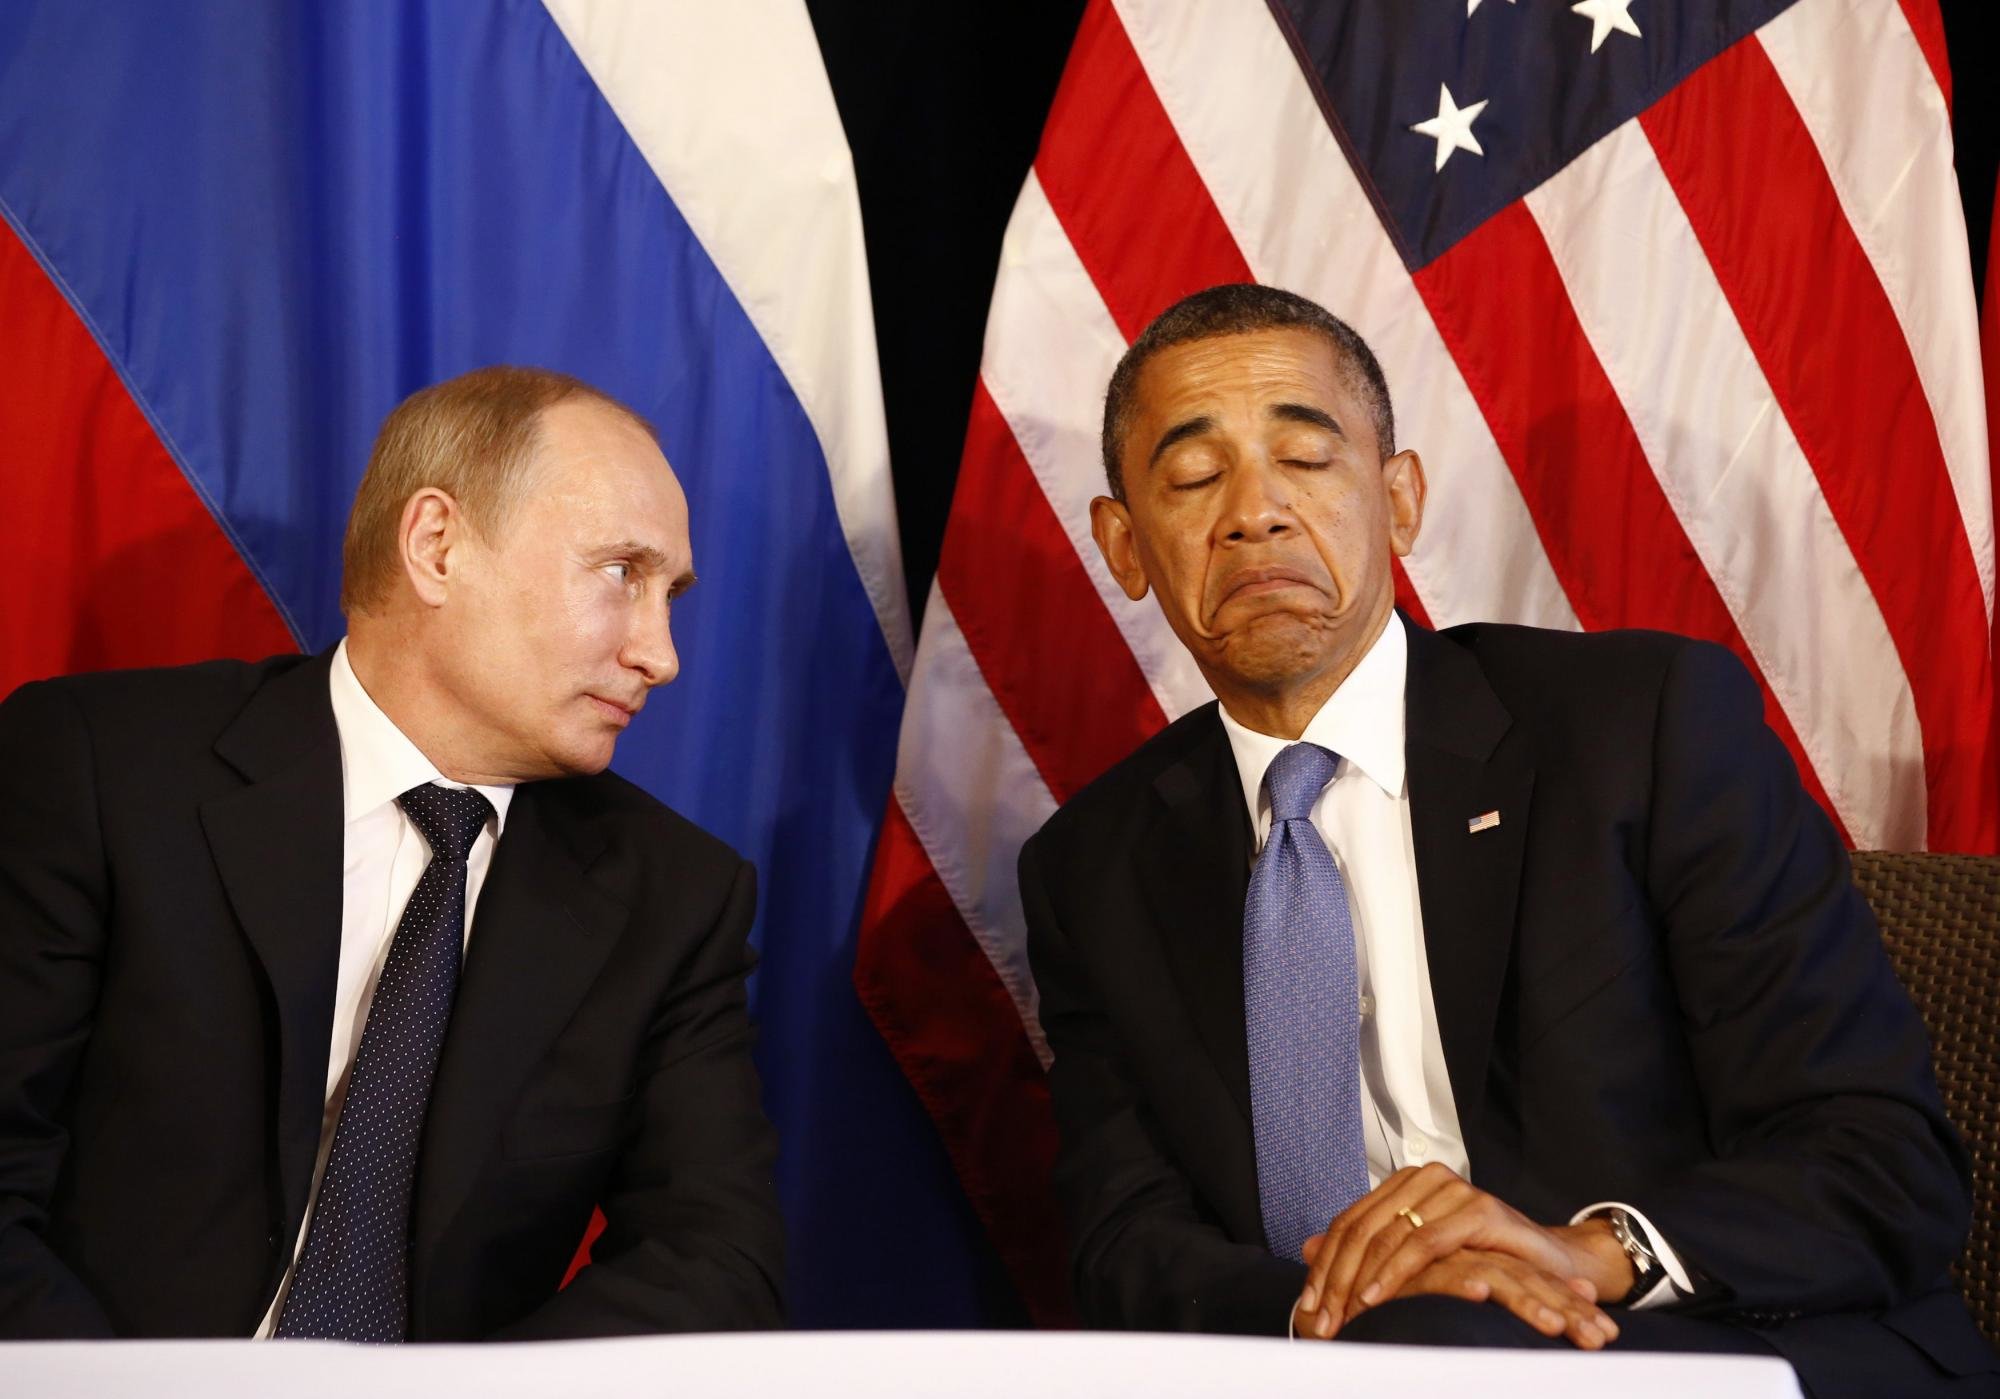 Vladimir Putin giving President Obama serious look